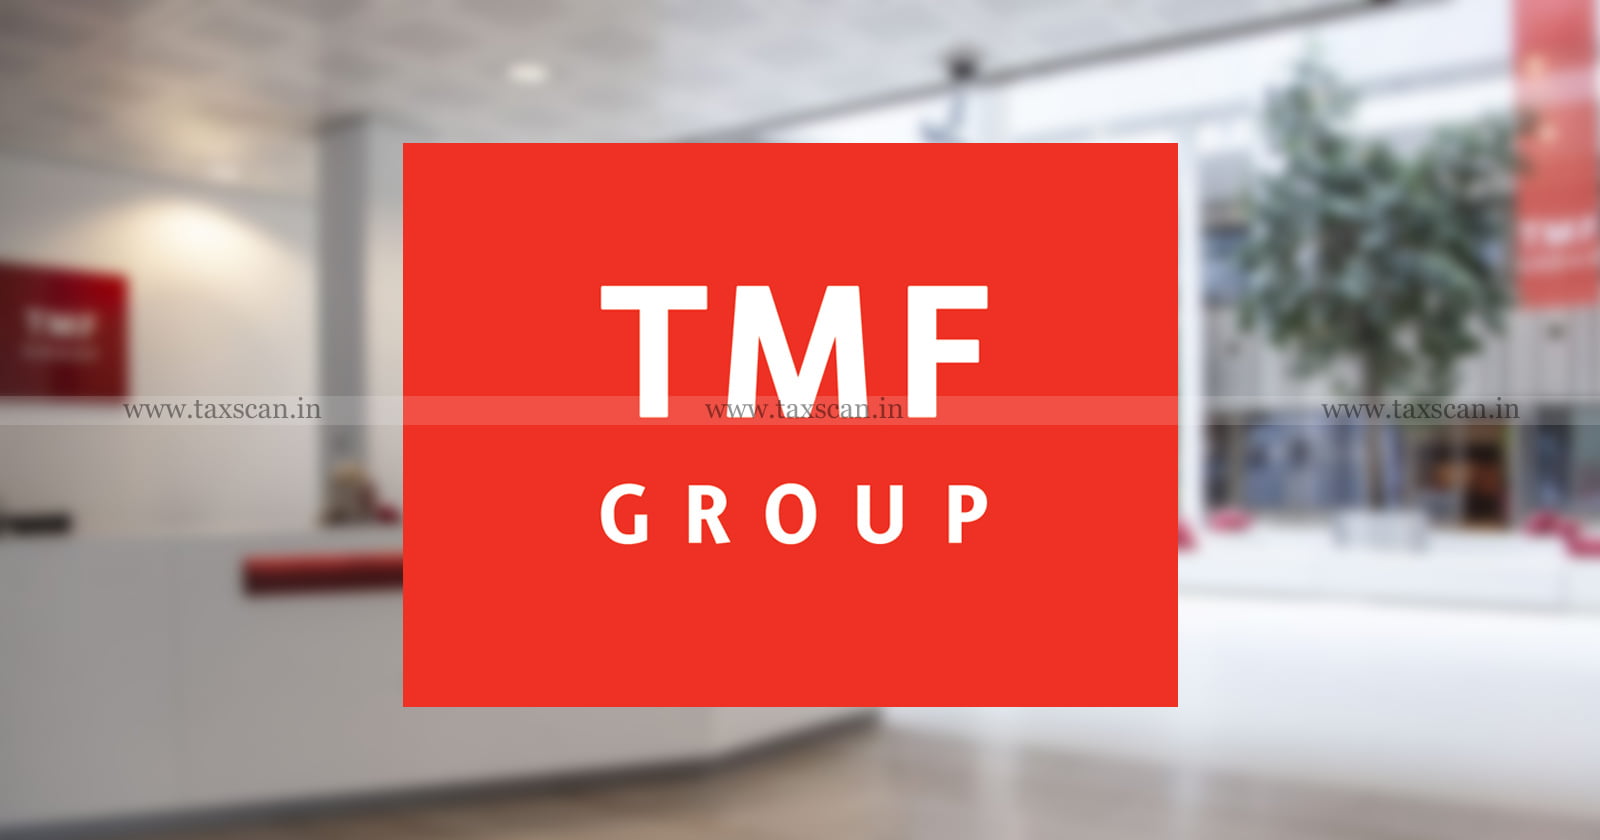 B - Com - Vacancy - in - TMF - Group - TAXSCAN